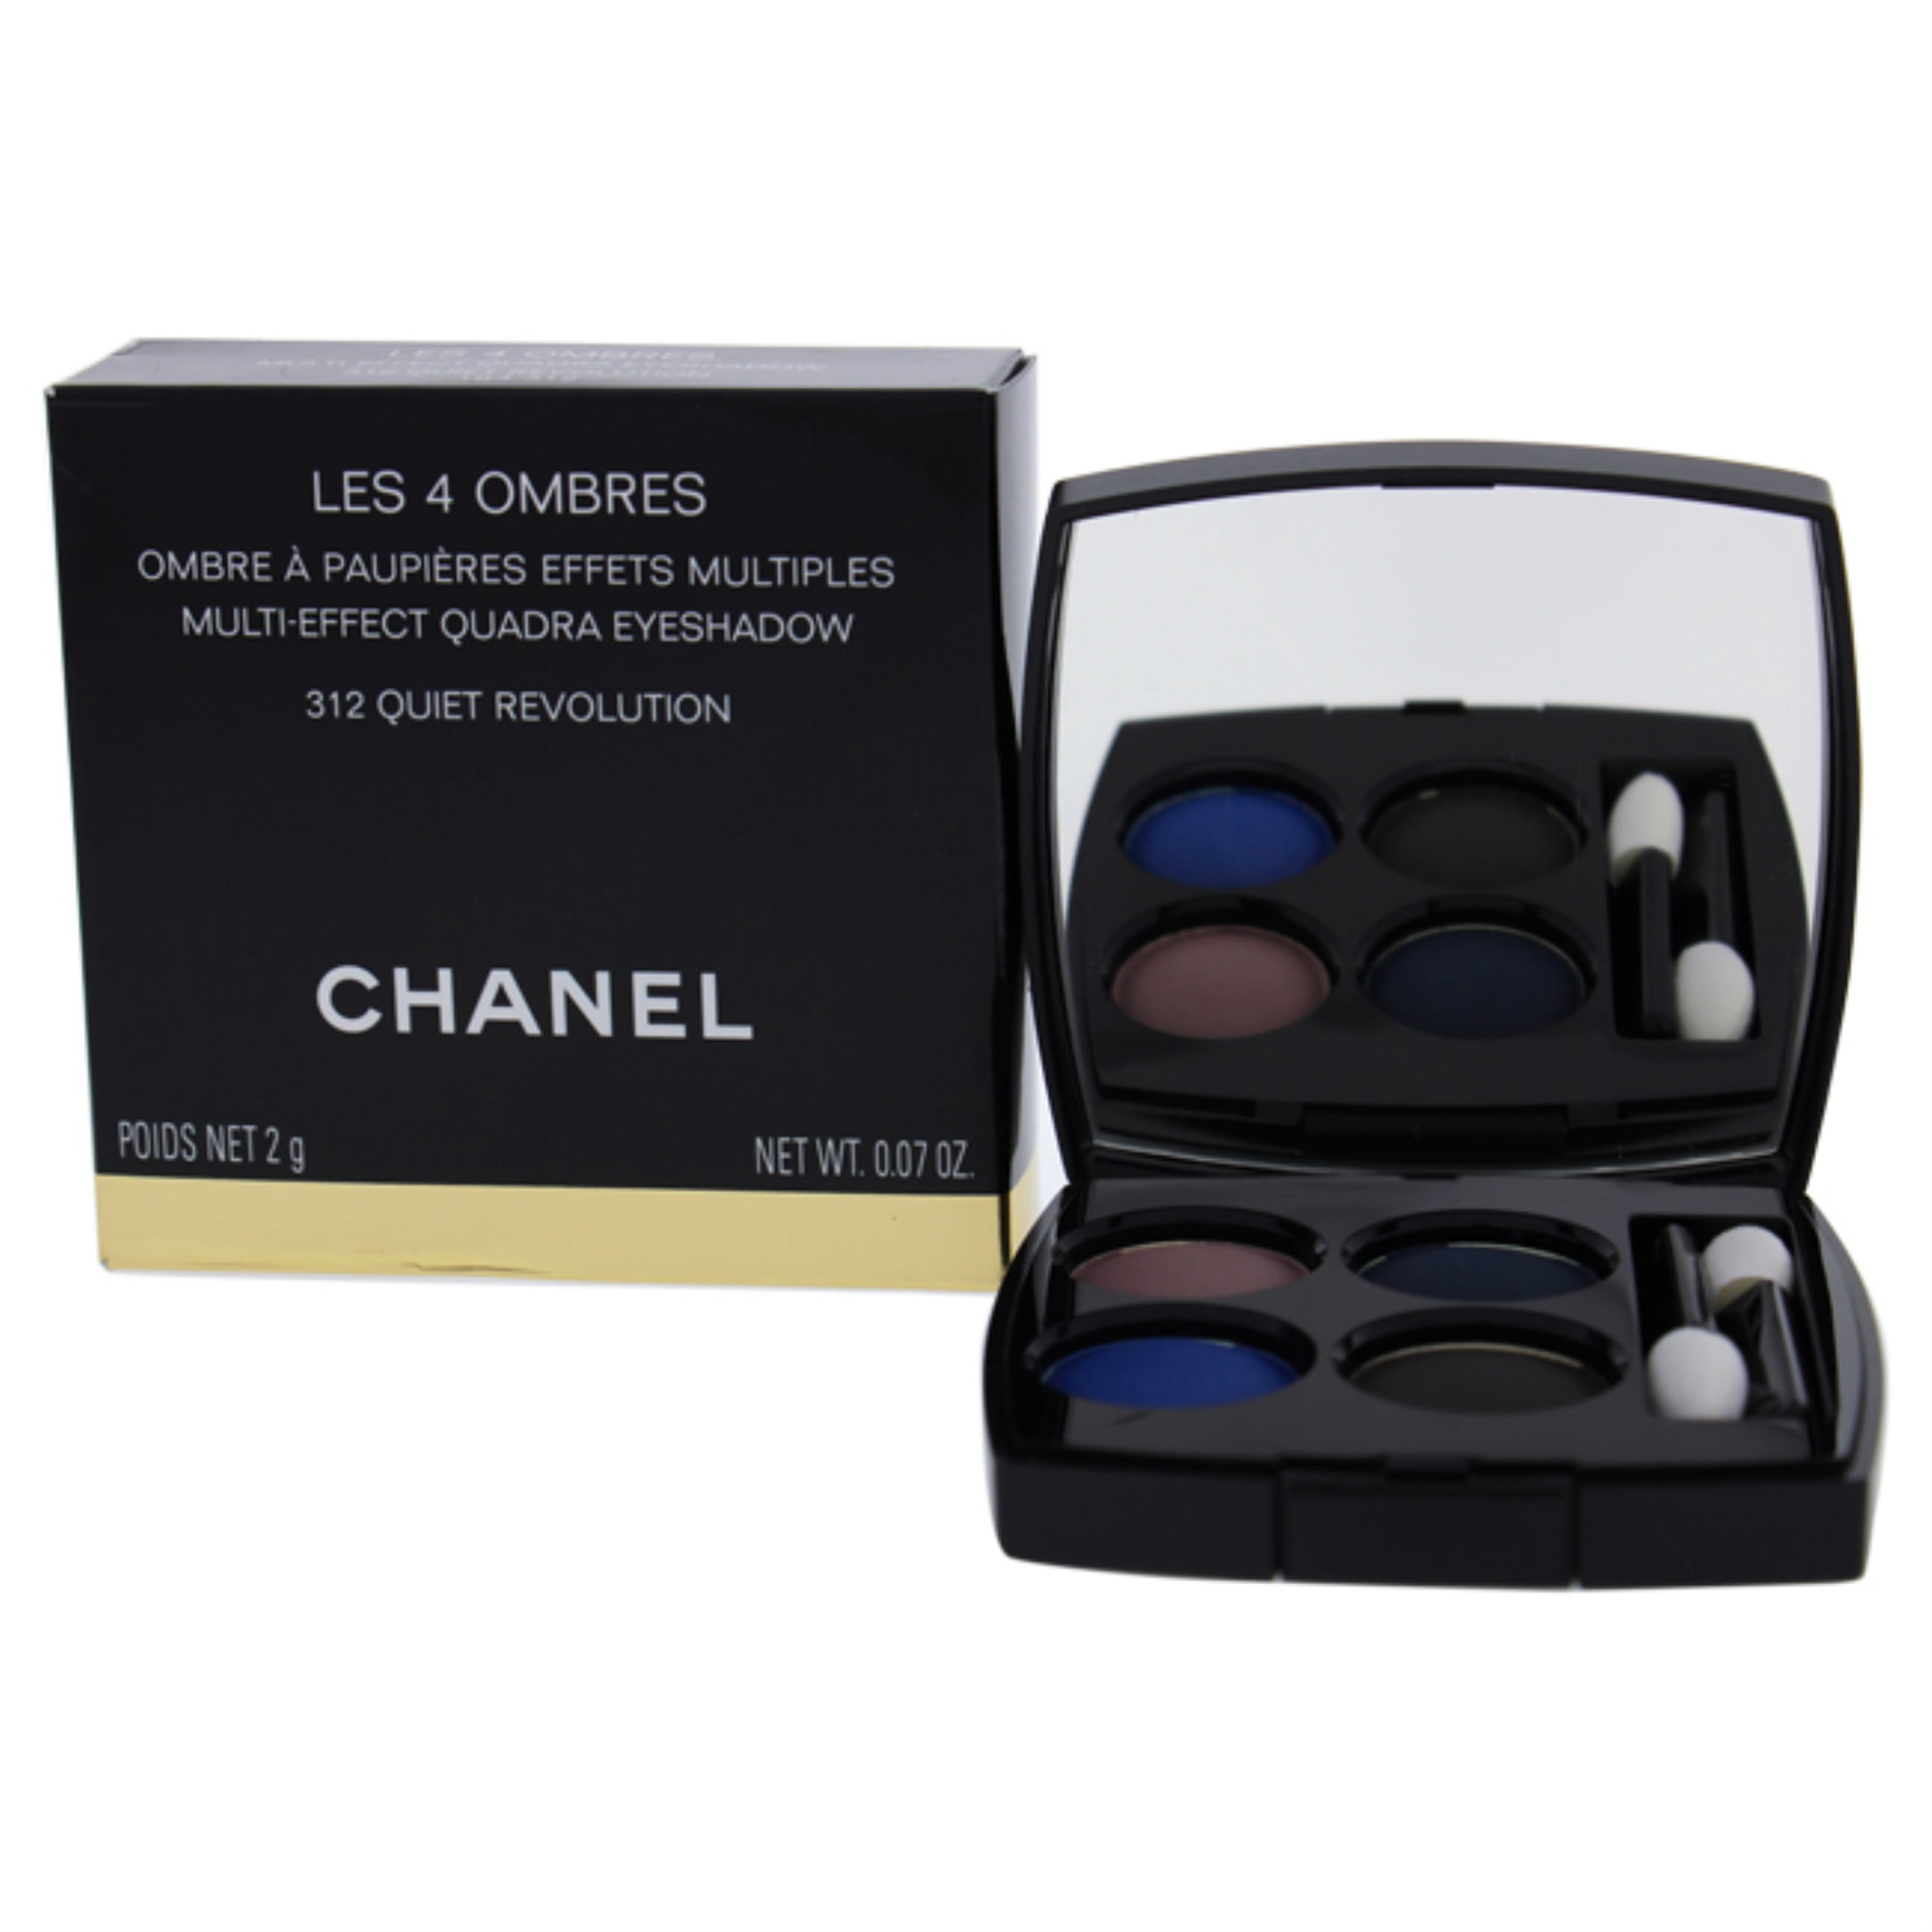 Chanel eyeshadow quad- 312 Quiet Revolution